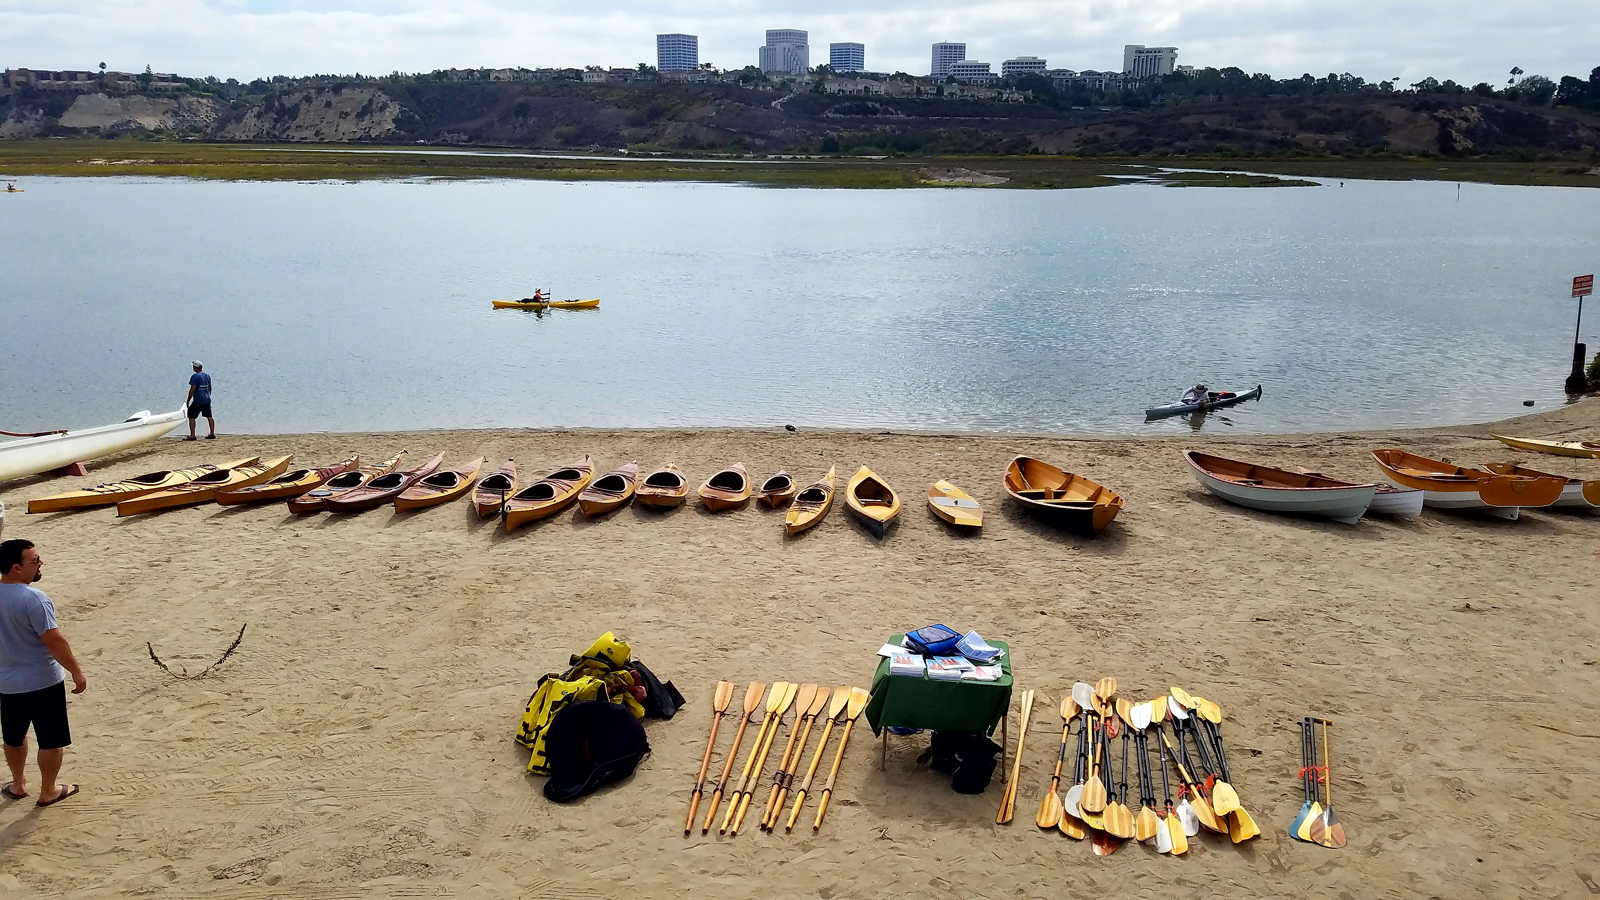 Chesapeake Light Craft Kayak Kits